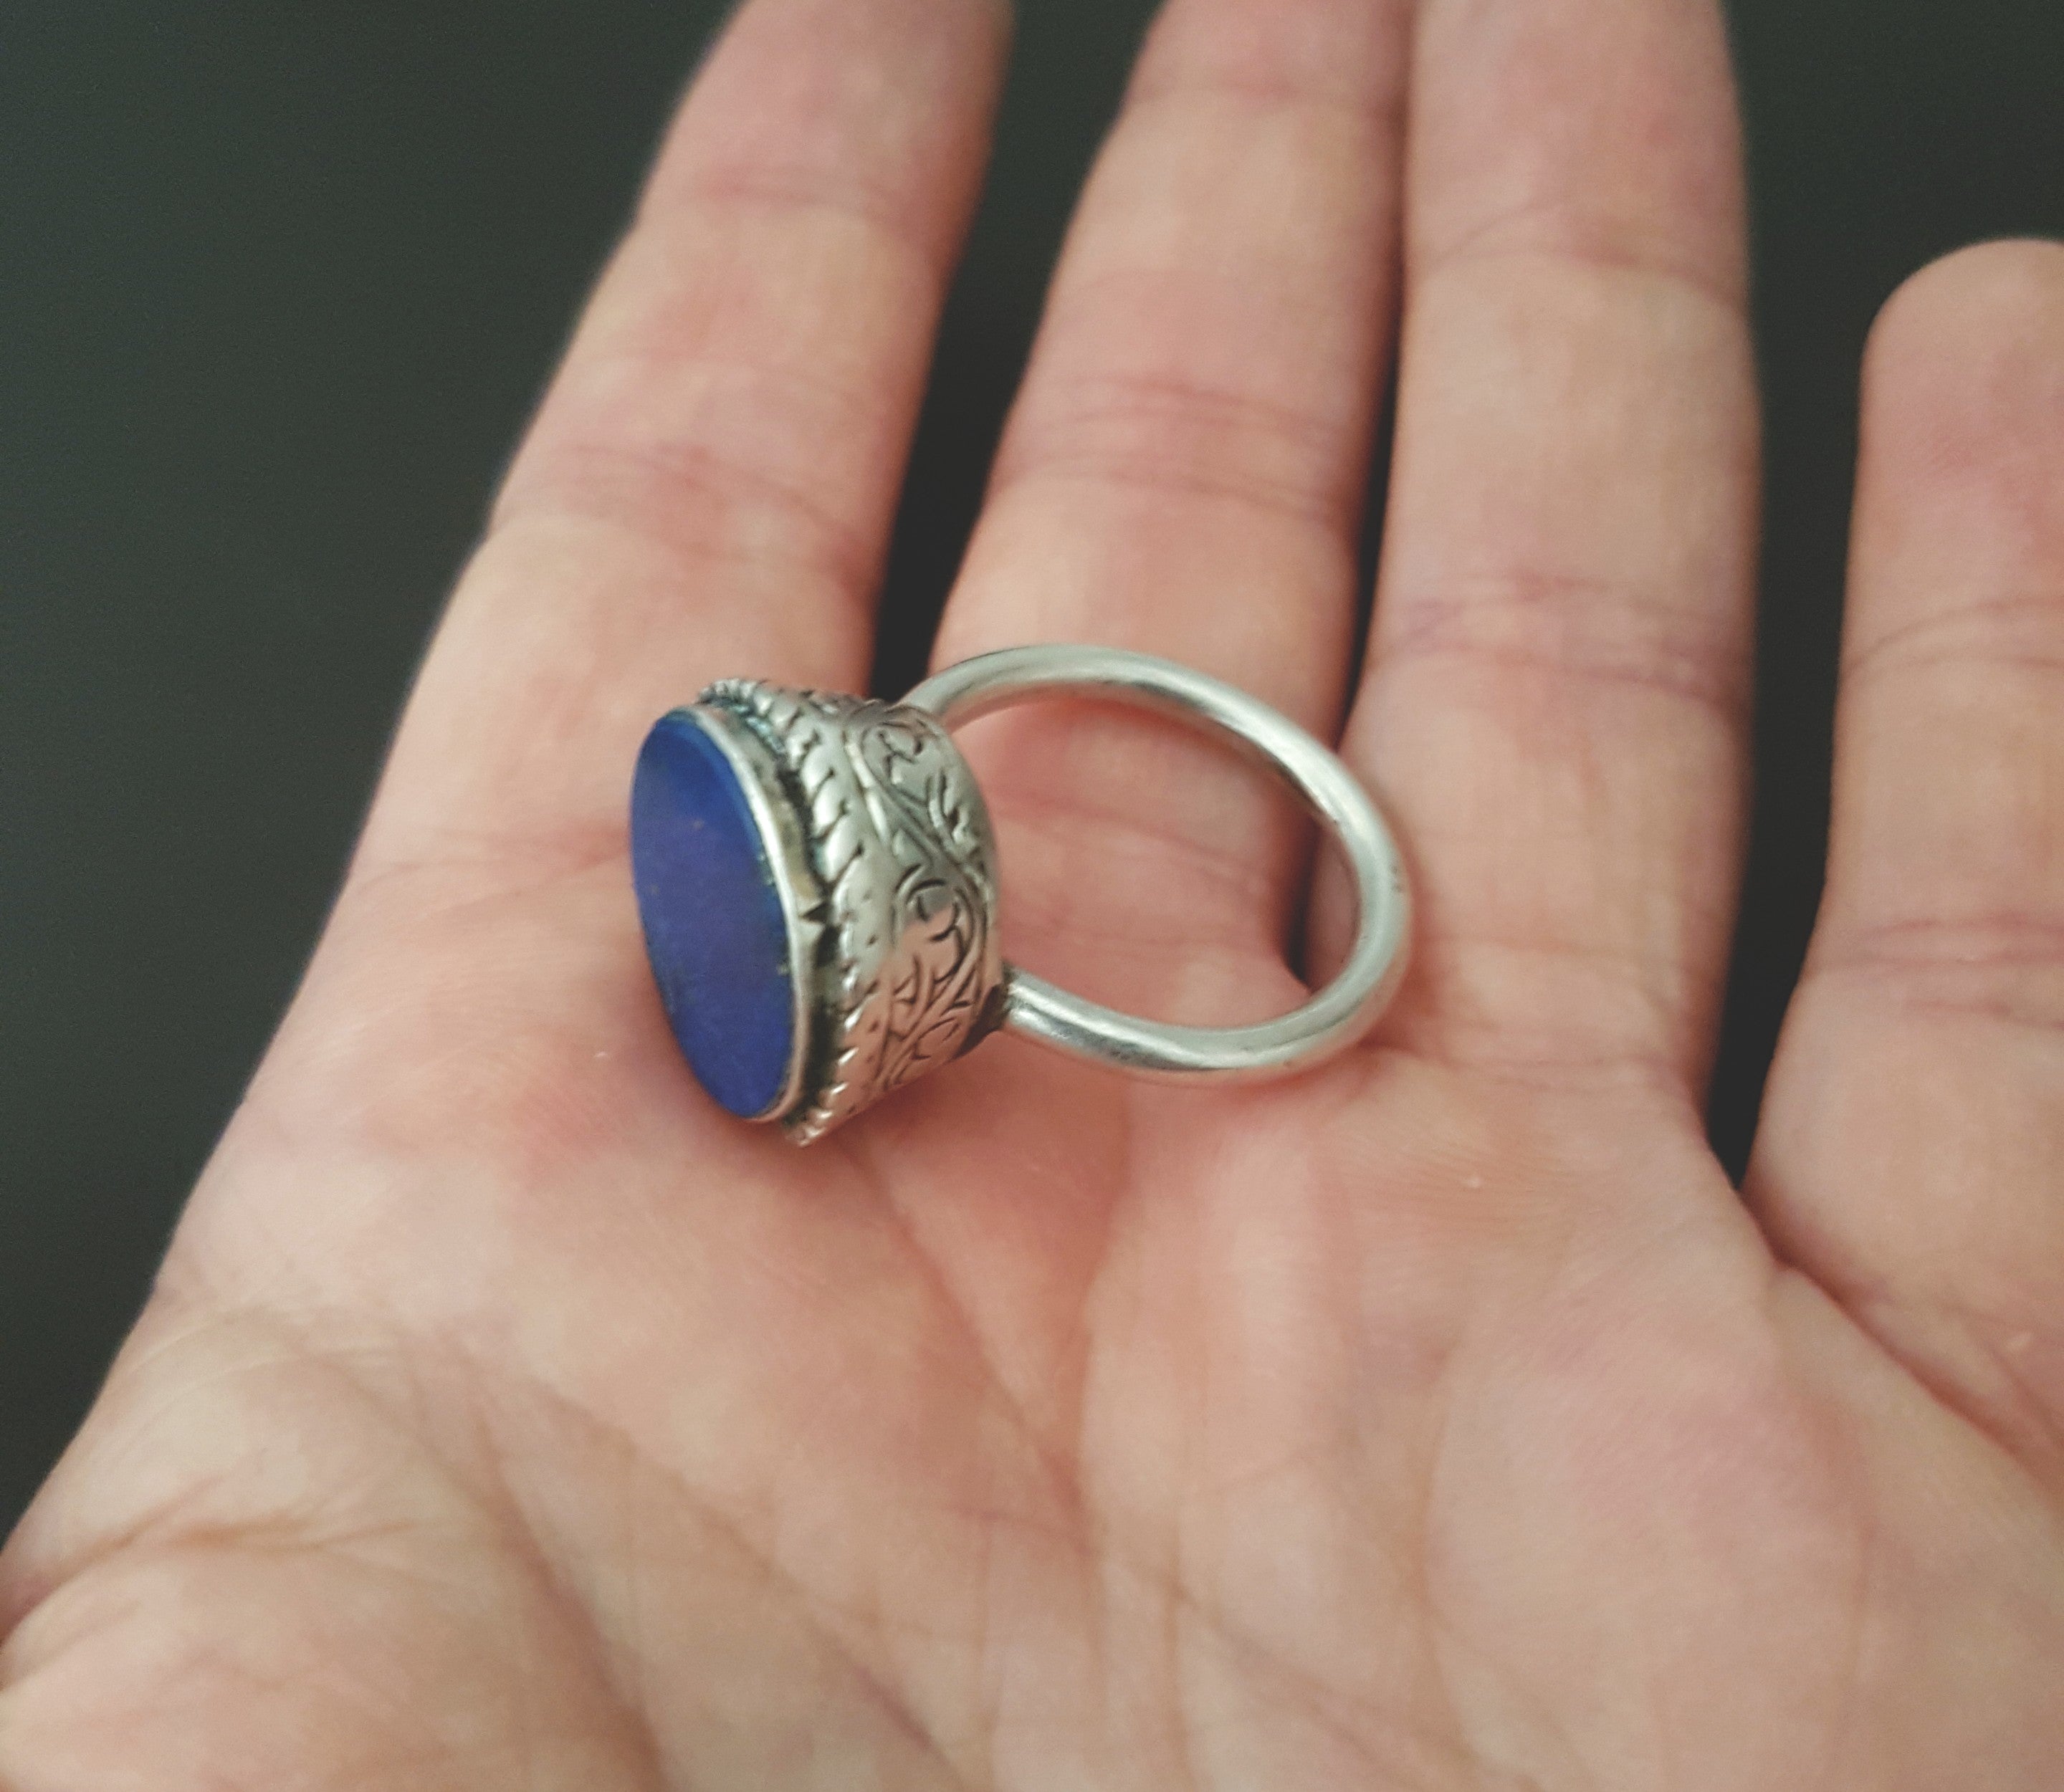 Afghani Lapis Lazuli Ring - Size 7.5